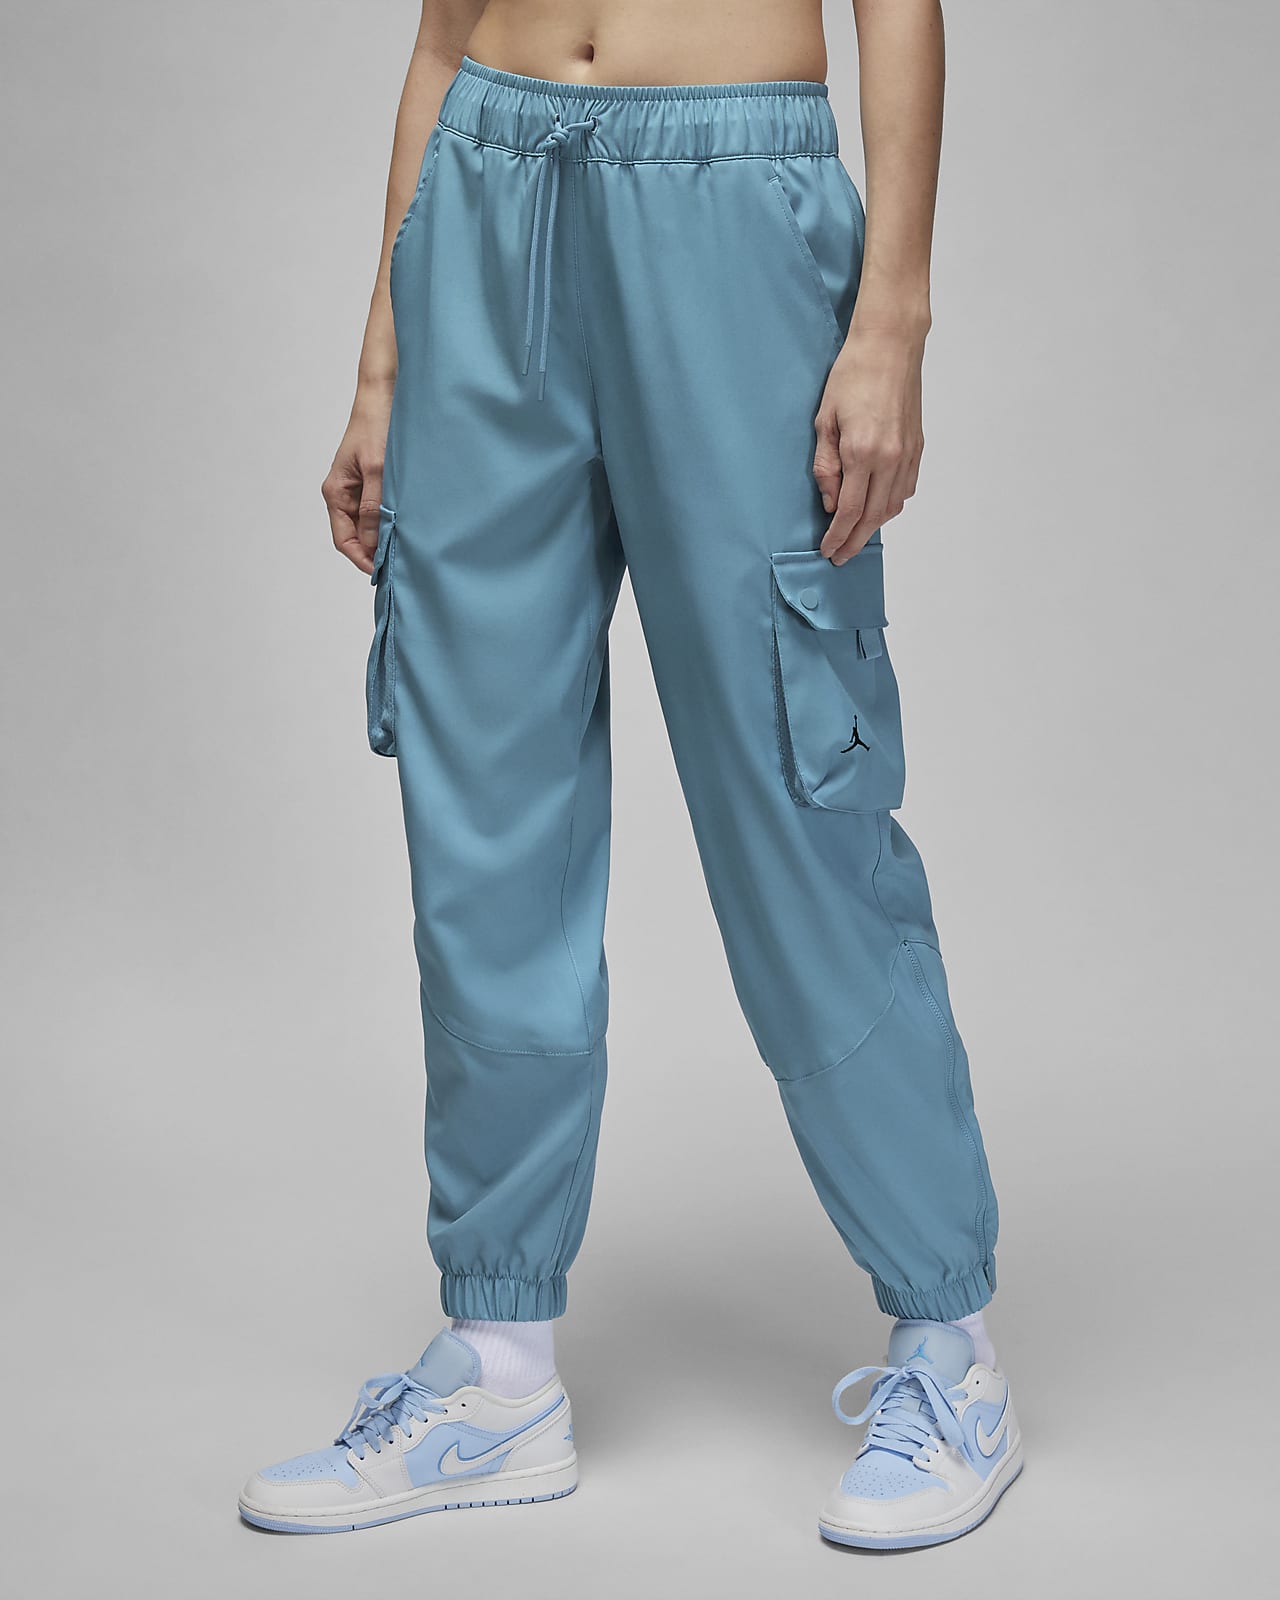 Nike Air Jordan Woven Pants Size M Joggers Womens Atomic Green CV7803 100  New